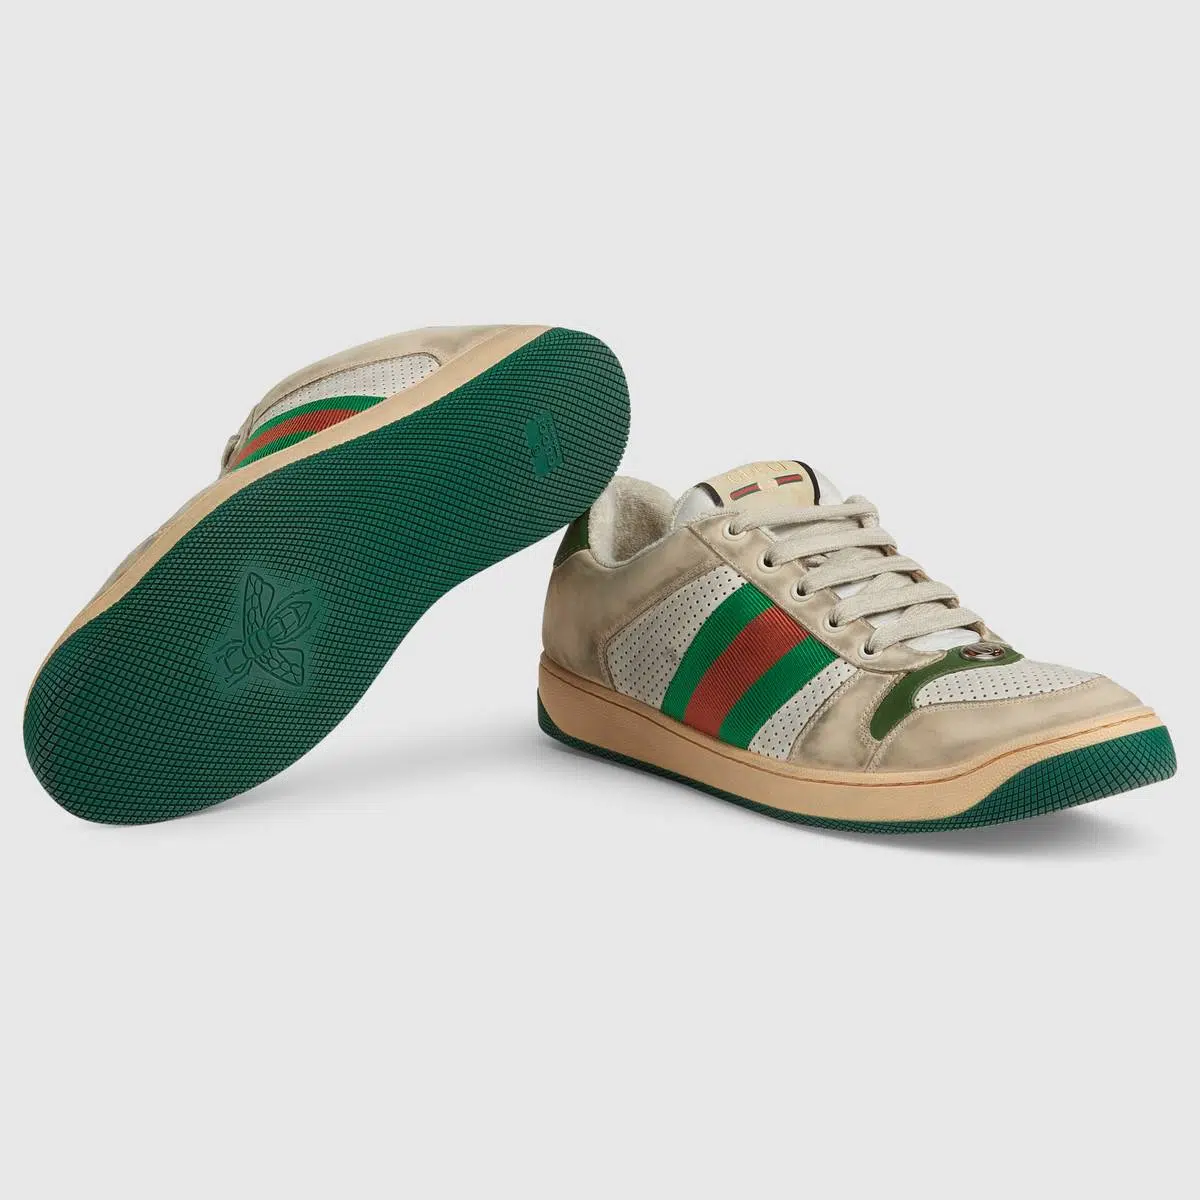 gucci pre-worn shoes